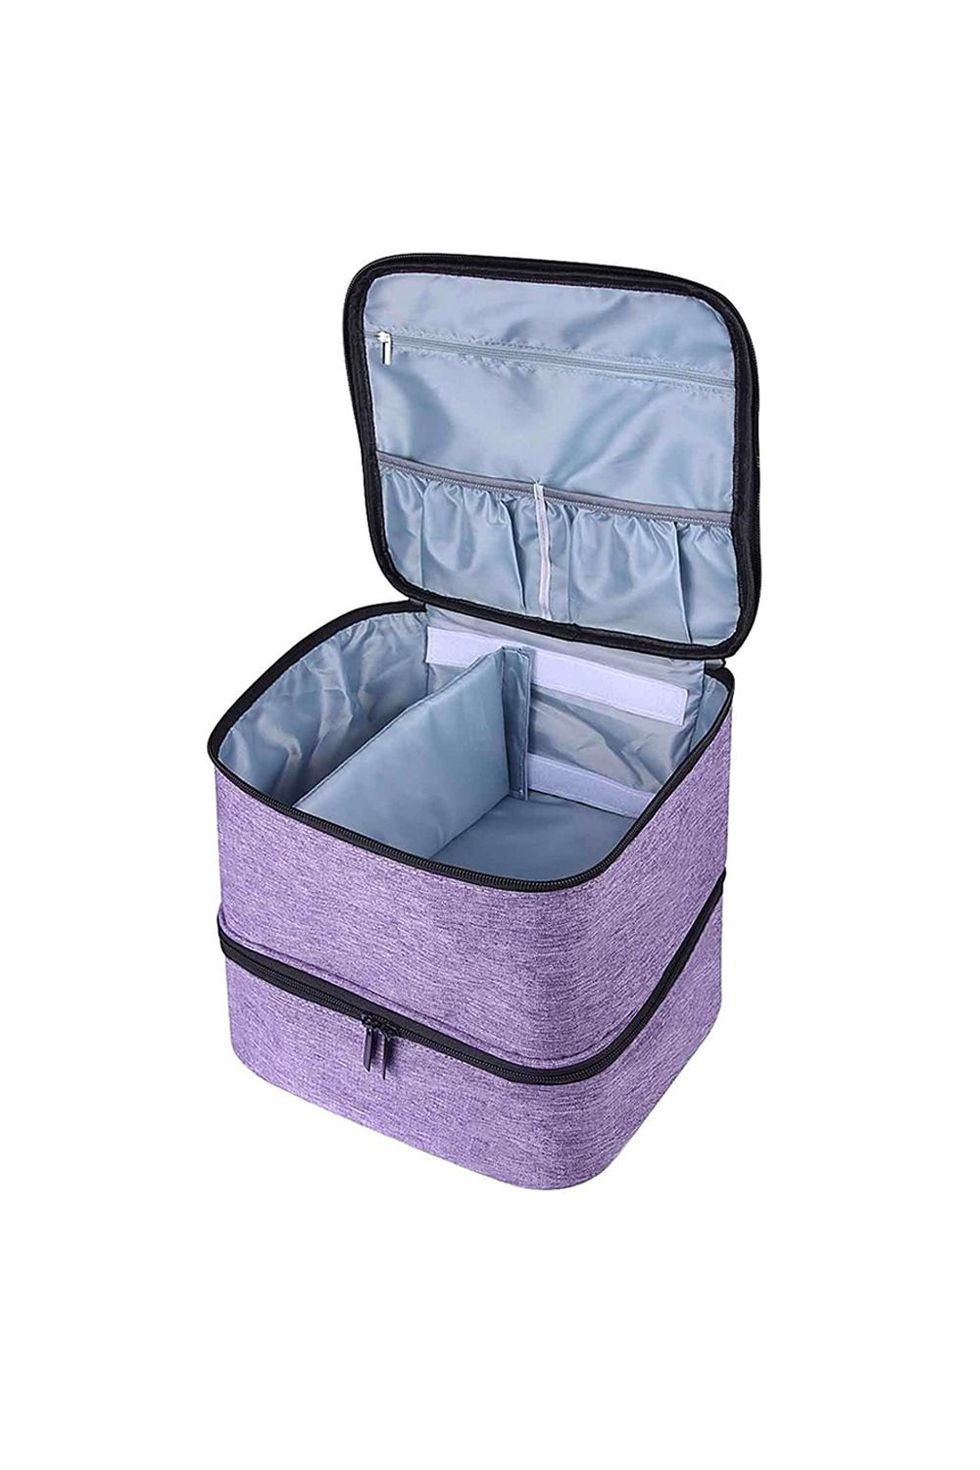 Large Nail Polish Organizer Storage Carry Case Bag Fit Light Dryer